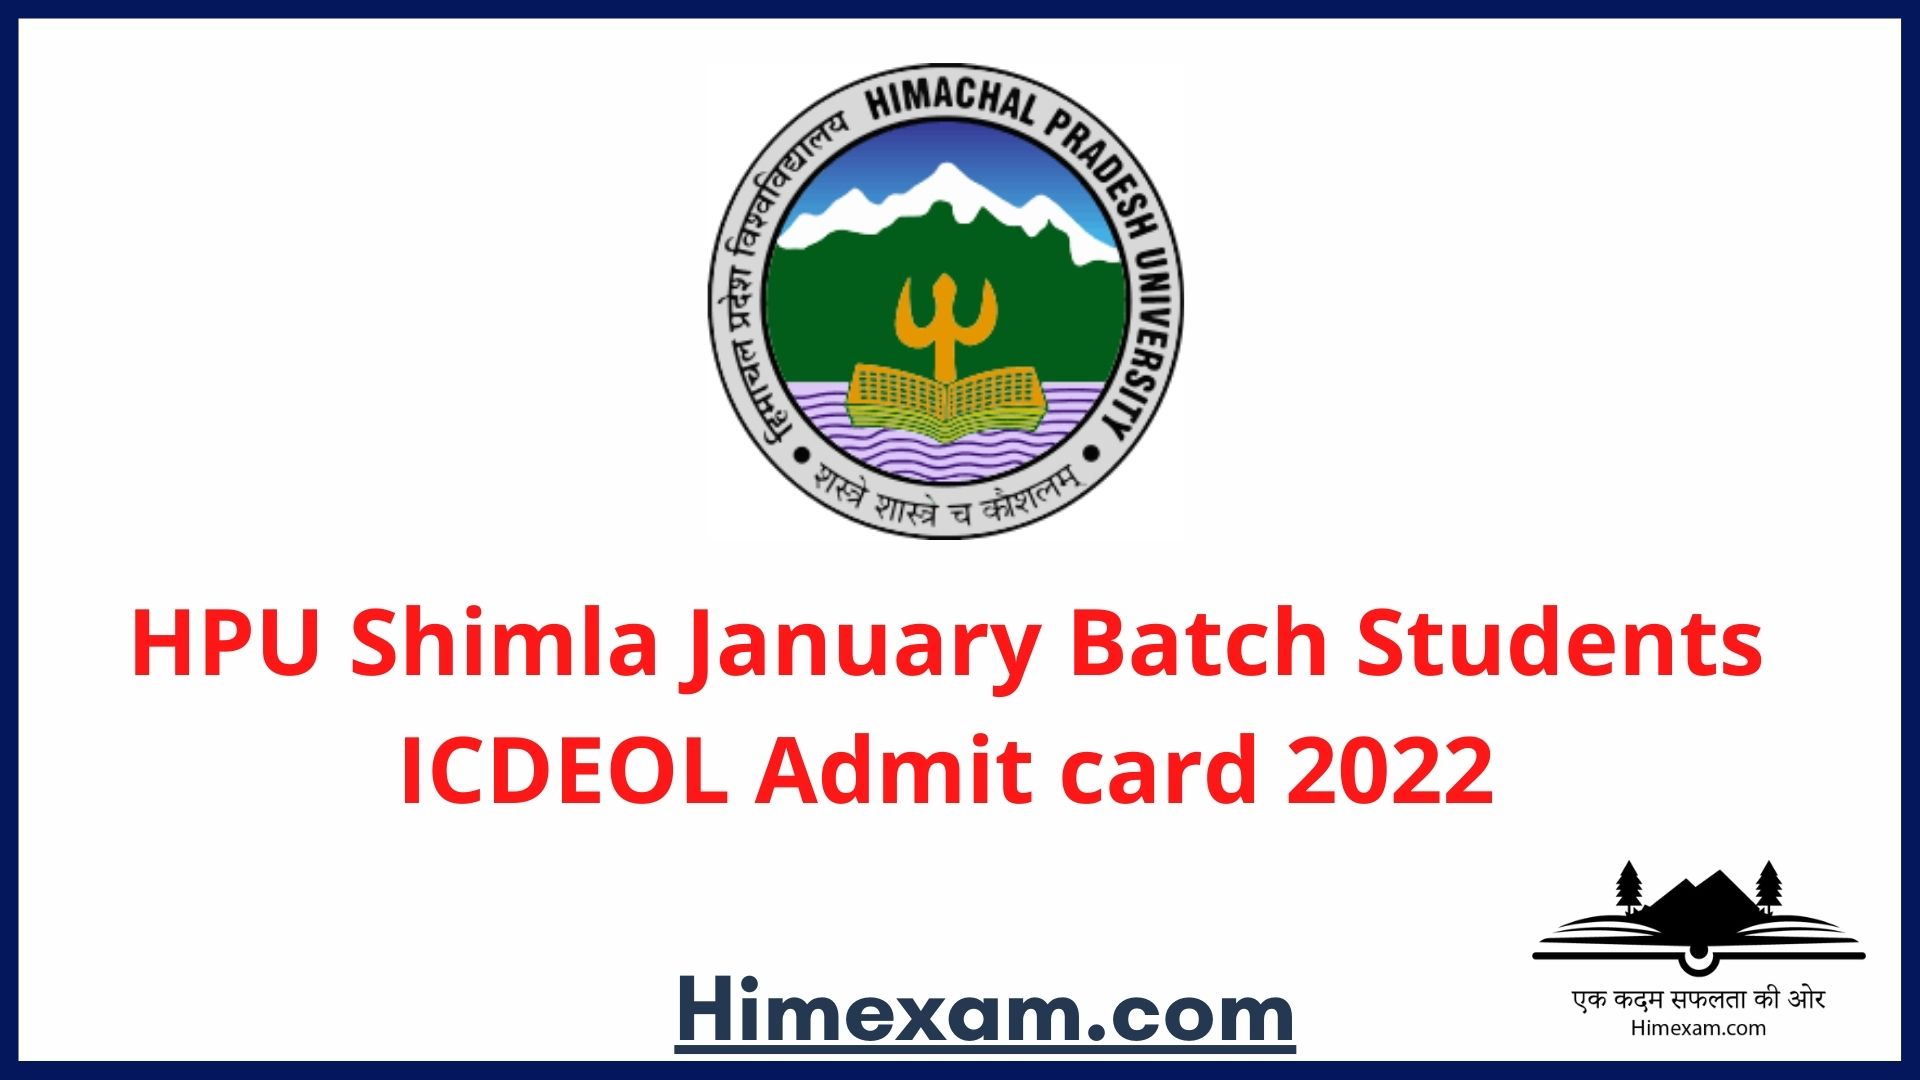 HPU Shimla January Batch Students ICDEOL Admit card 2022